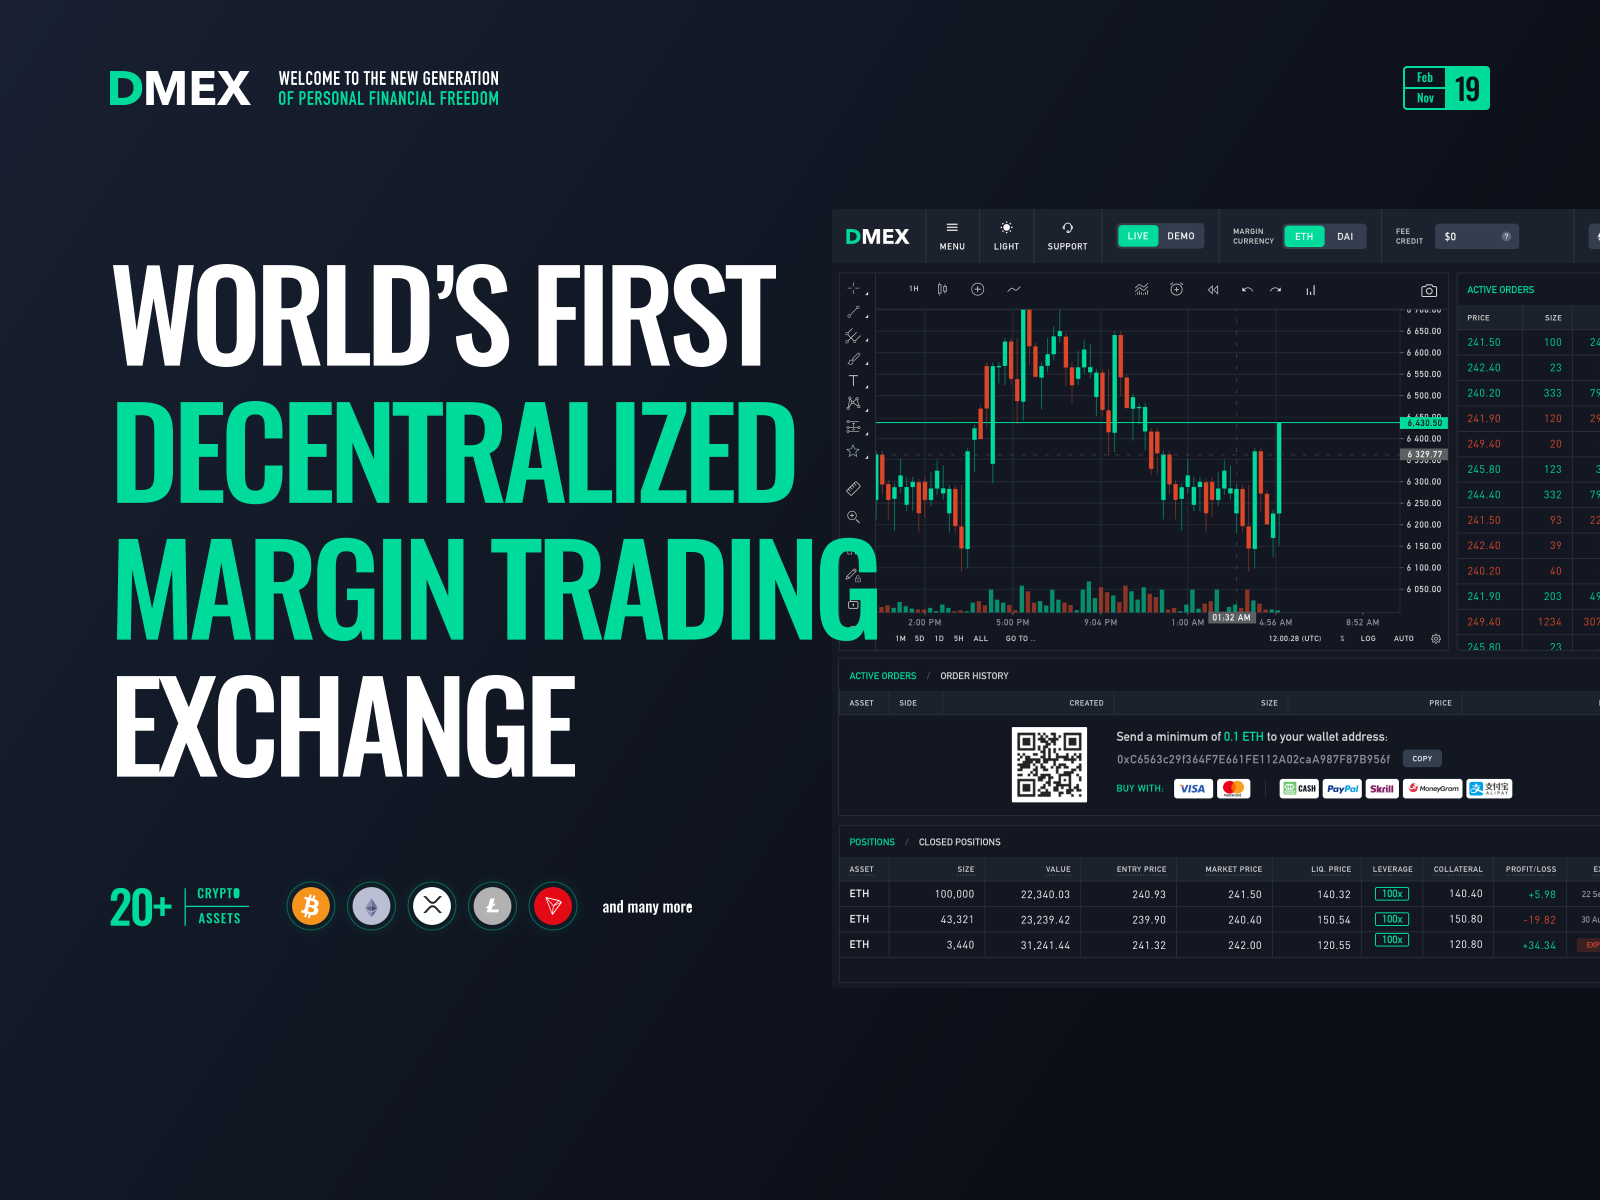 DMEX Decentralized Margin Trading Exchange by Vitalii Razgulin on Dribbble